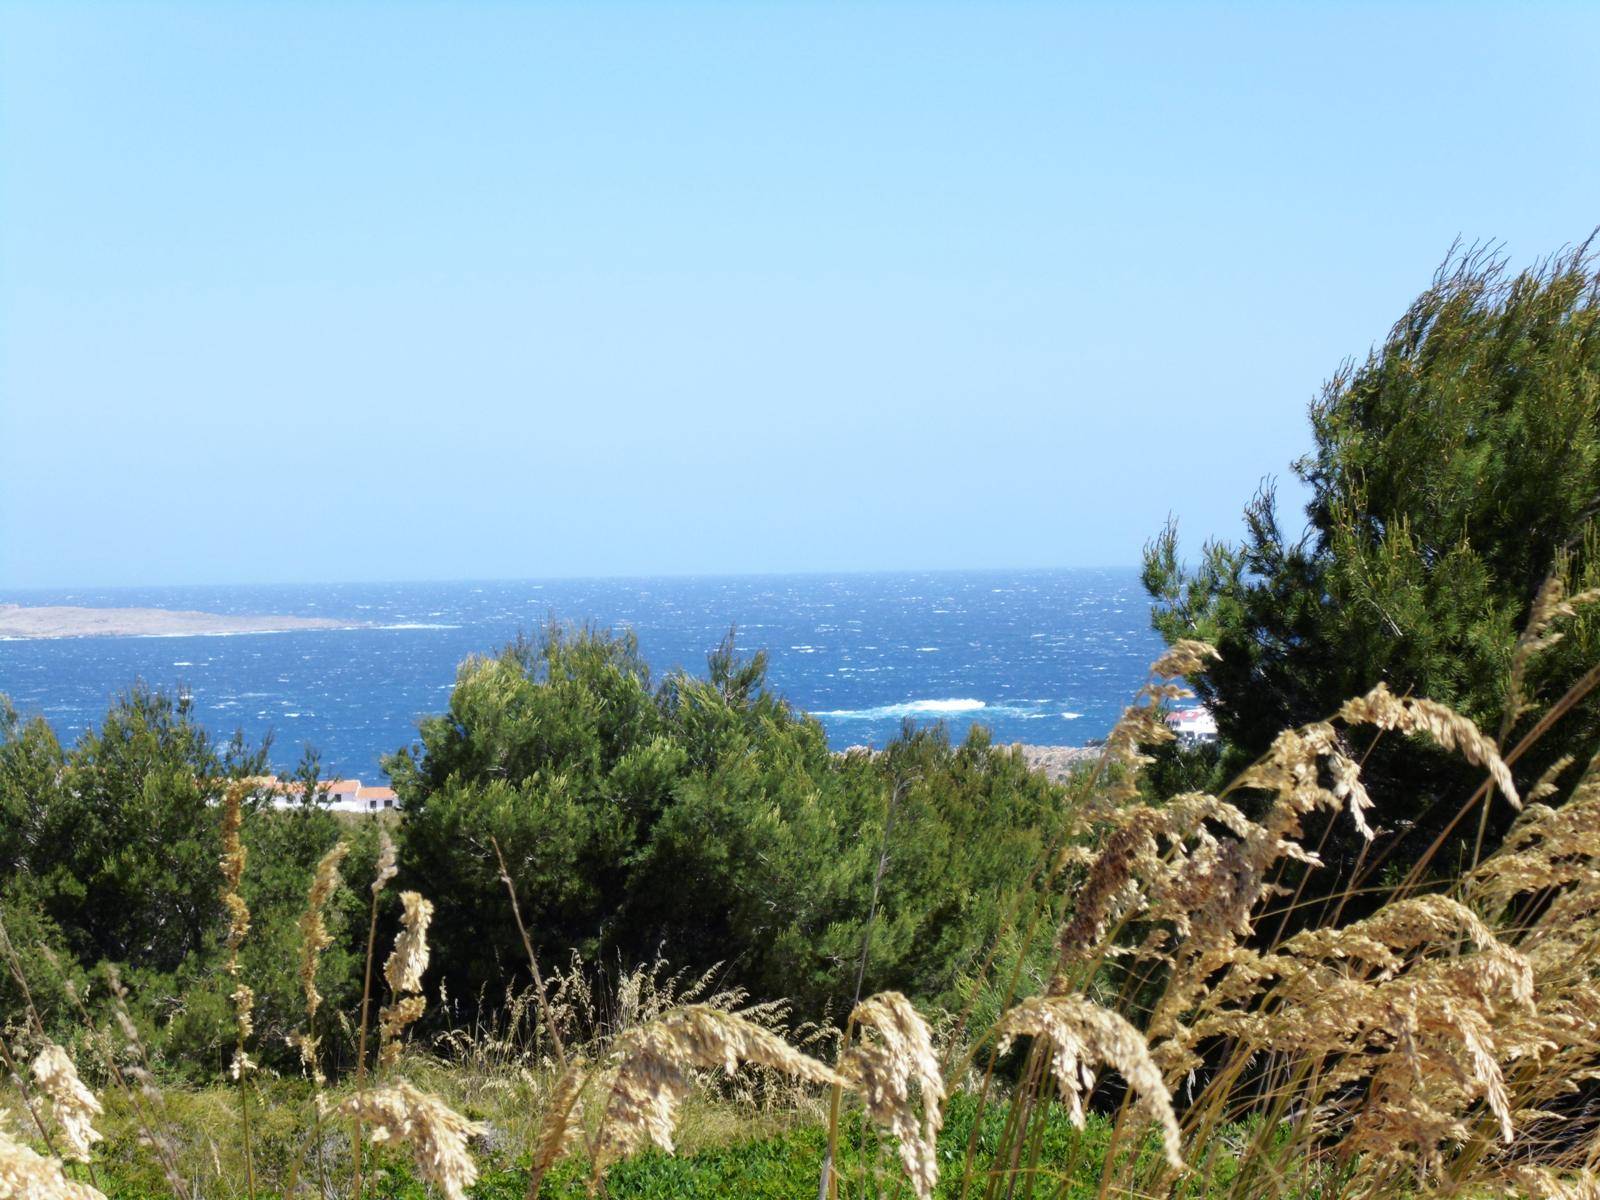 Villa in beautiful urbanisation of Coves Noves on Menorca